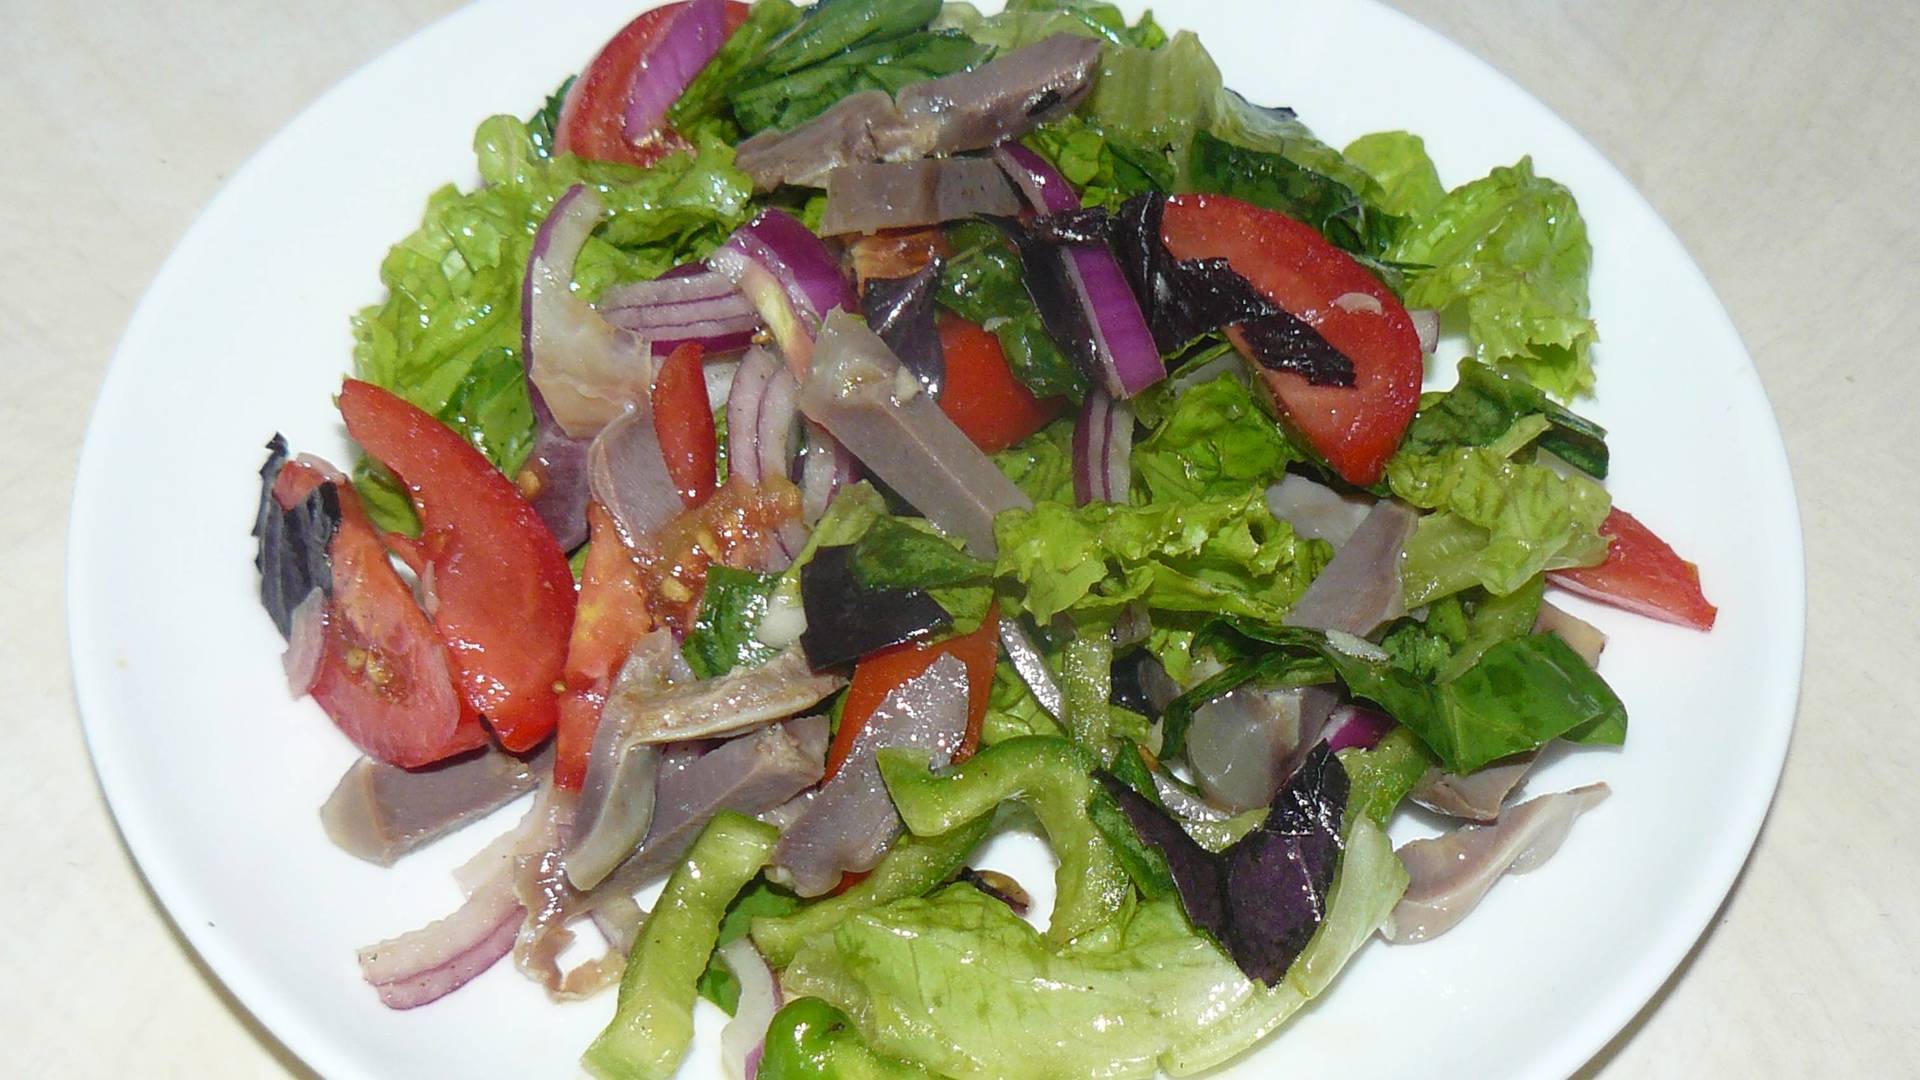 Фото к рецепту: Летний салат с желудками